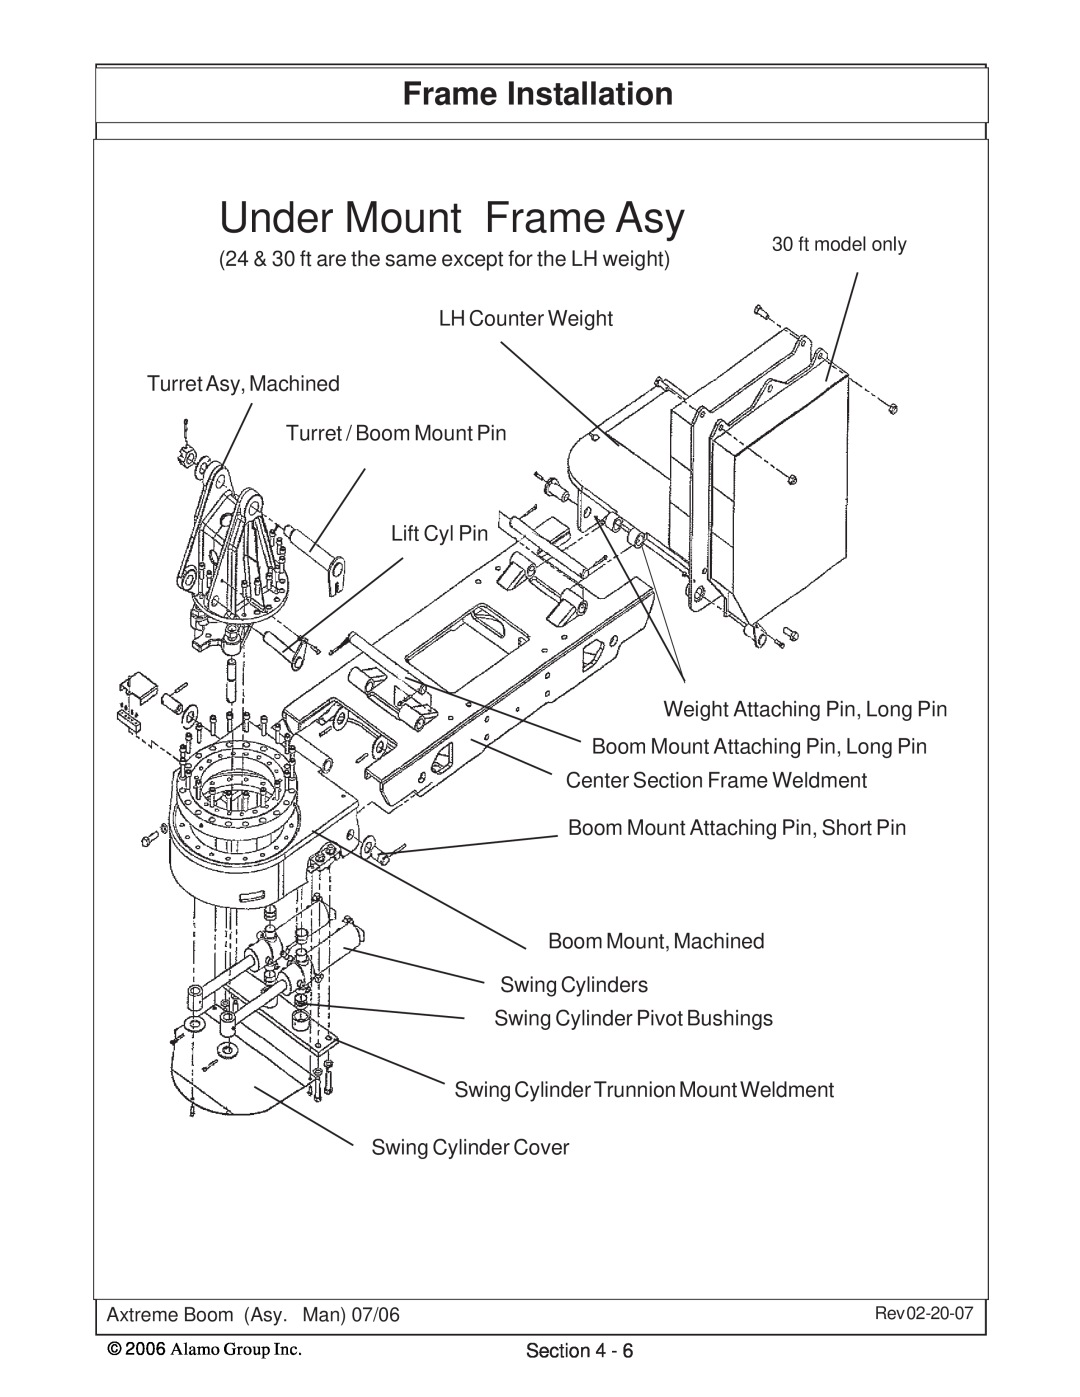 Alamo 02984405 instruction manual Under Mount Frame Asy, Frame Installation 